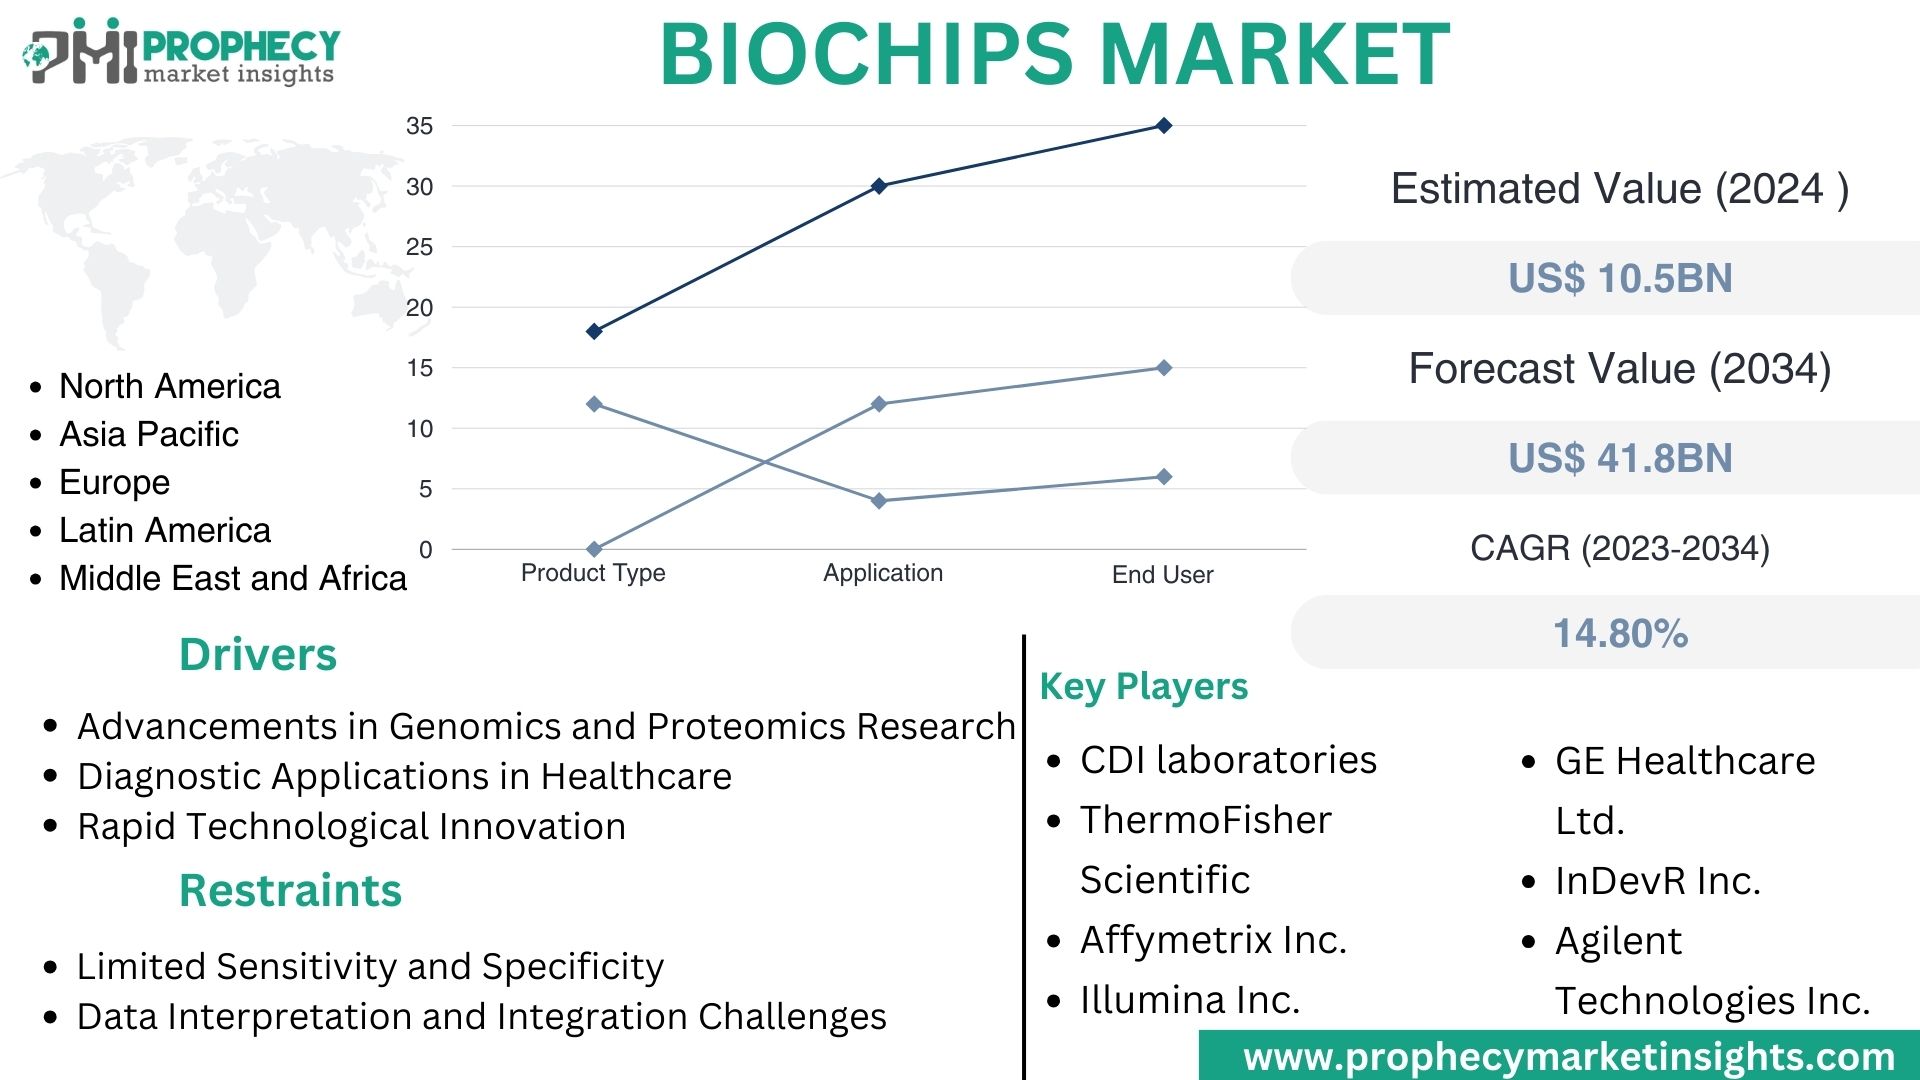 Biochips Market